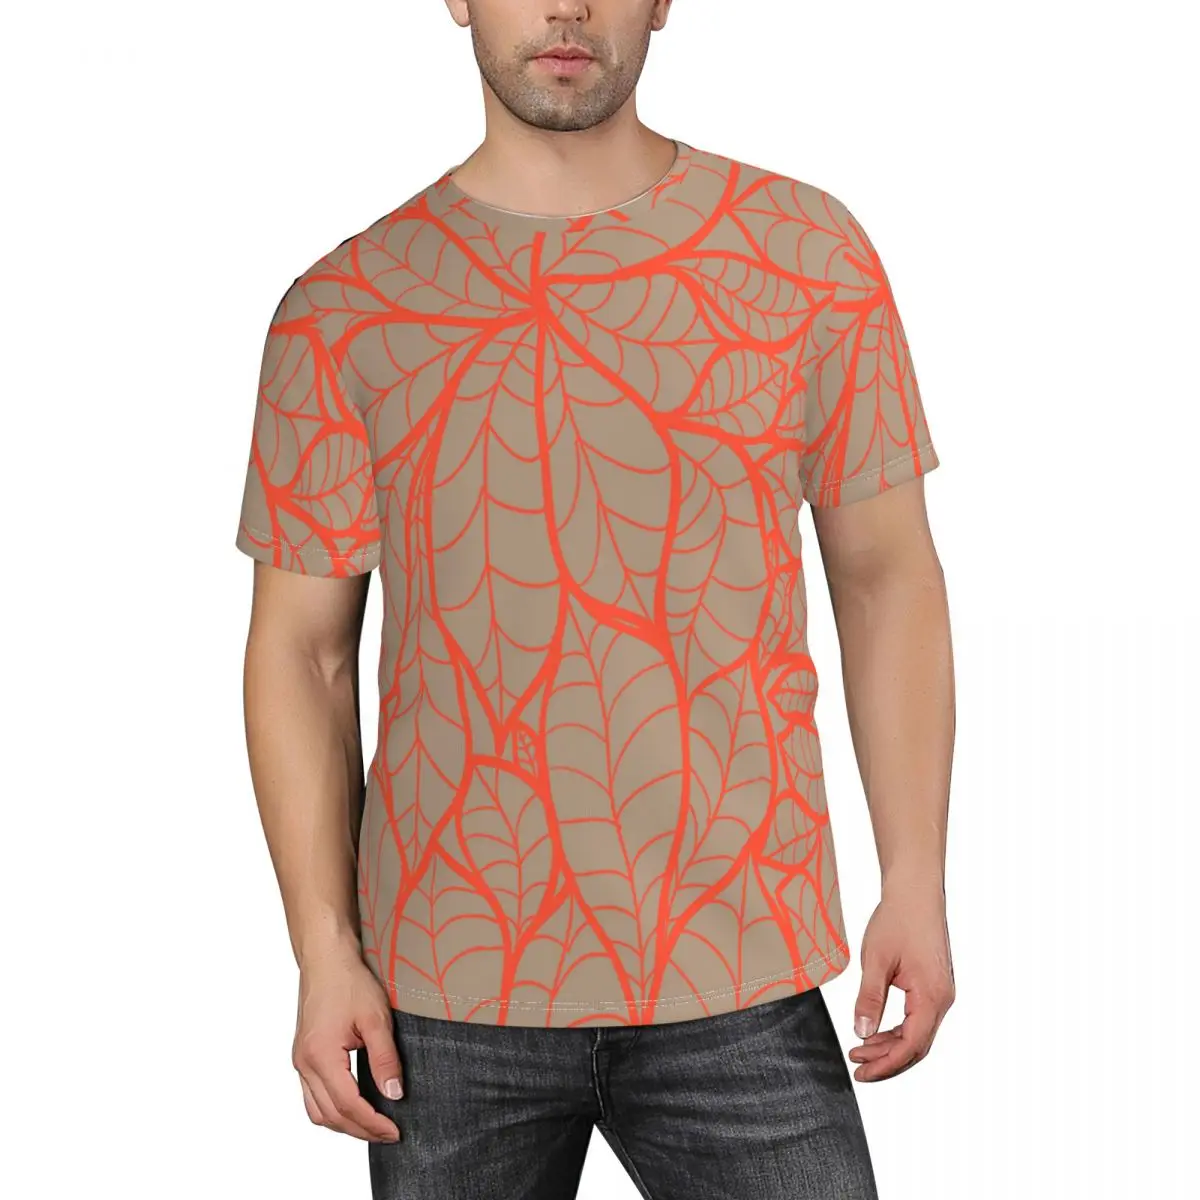 

Men's Summer Short Sleeve T Shirt Doodle Chestnut Leaves Element Pattern Orange Casual T-shirts Tops Clothing